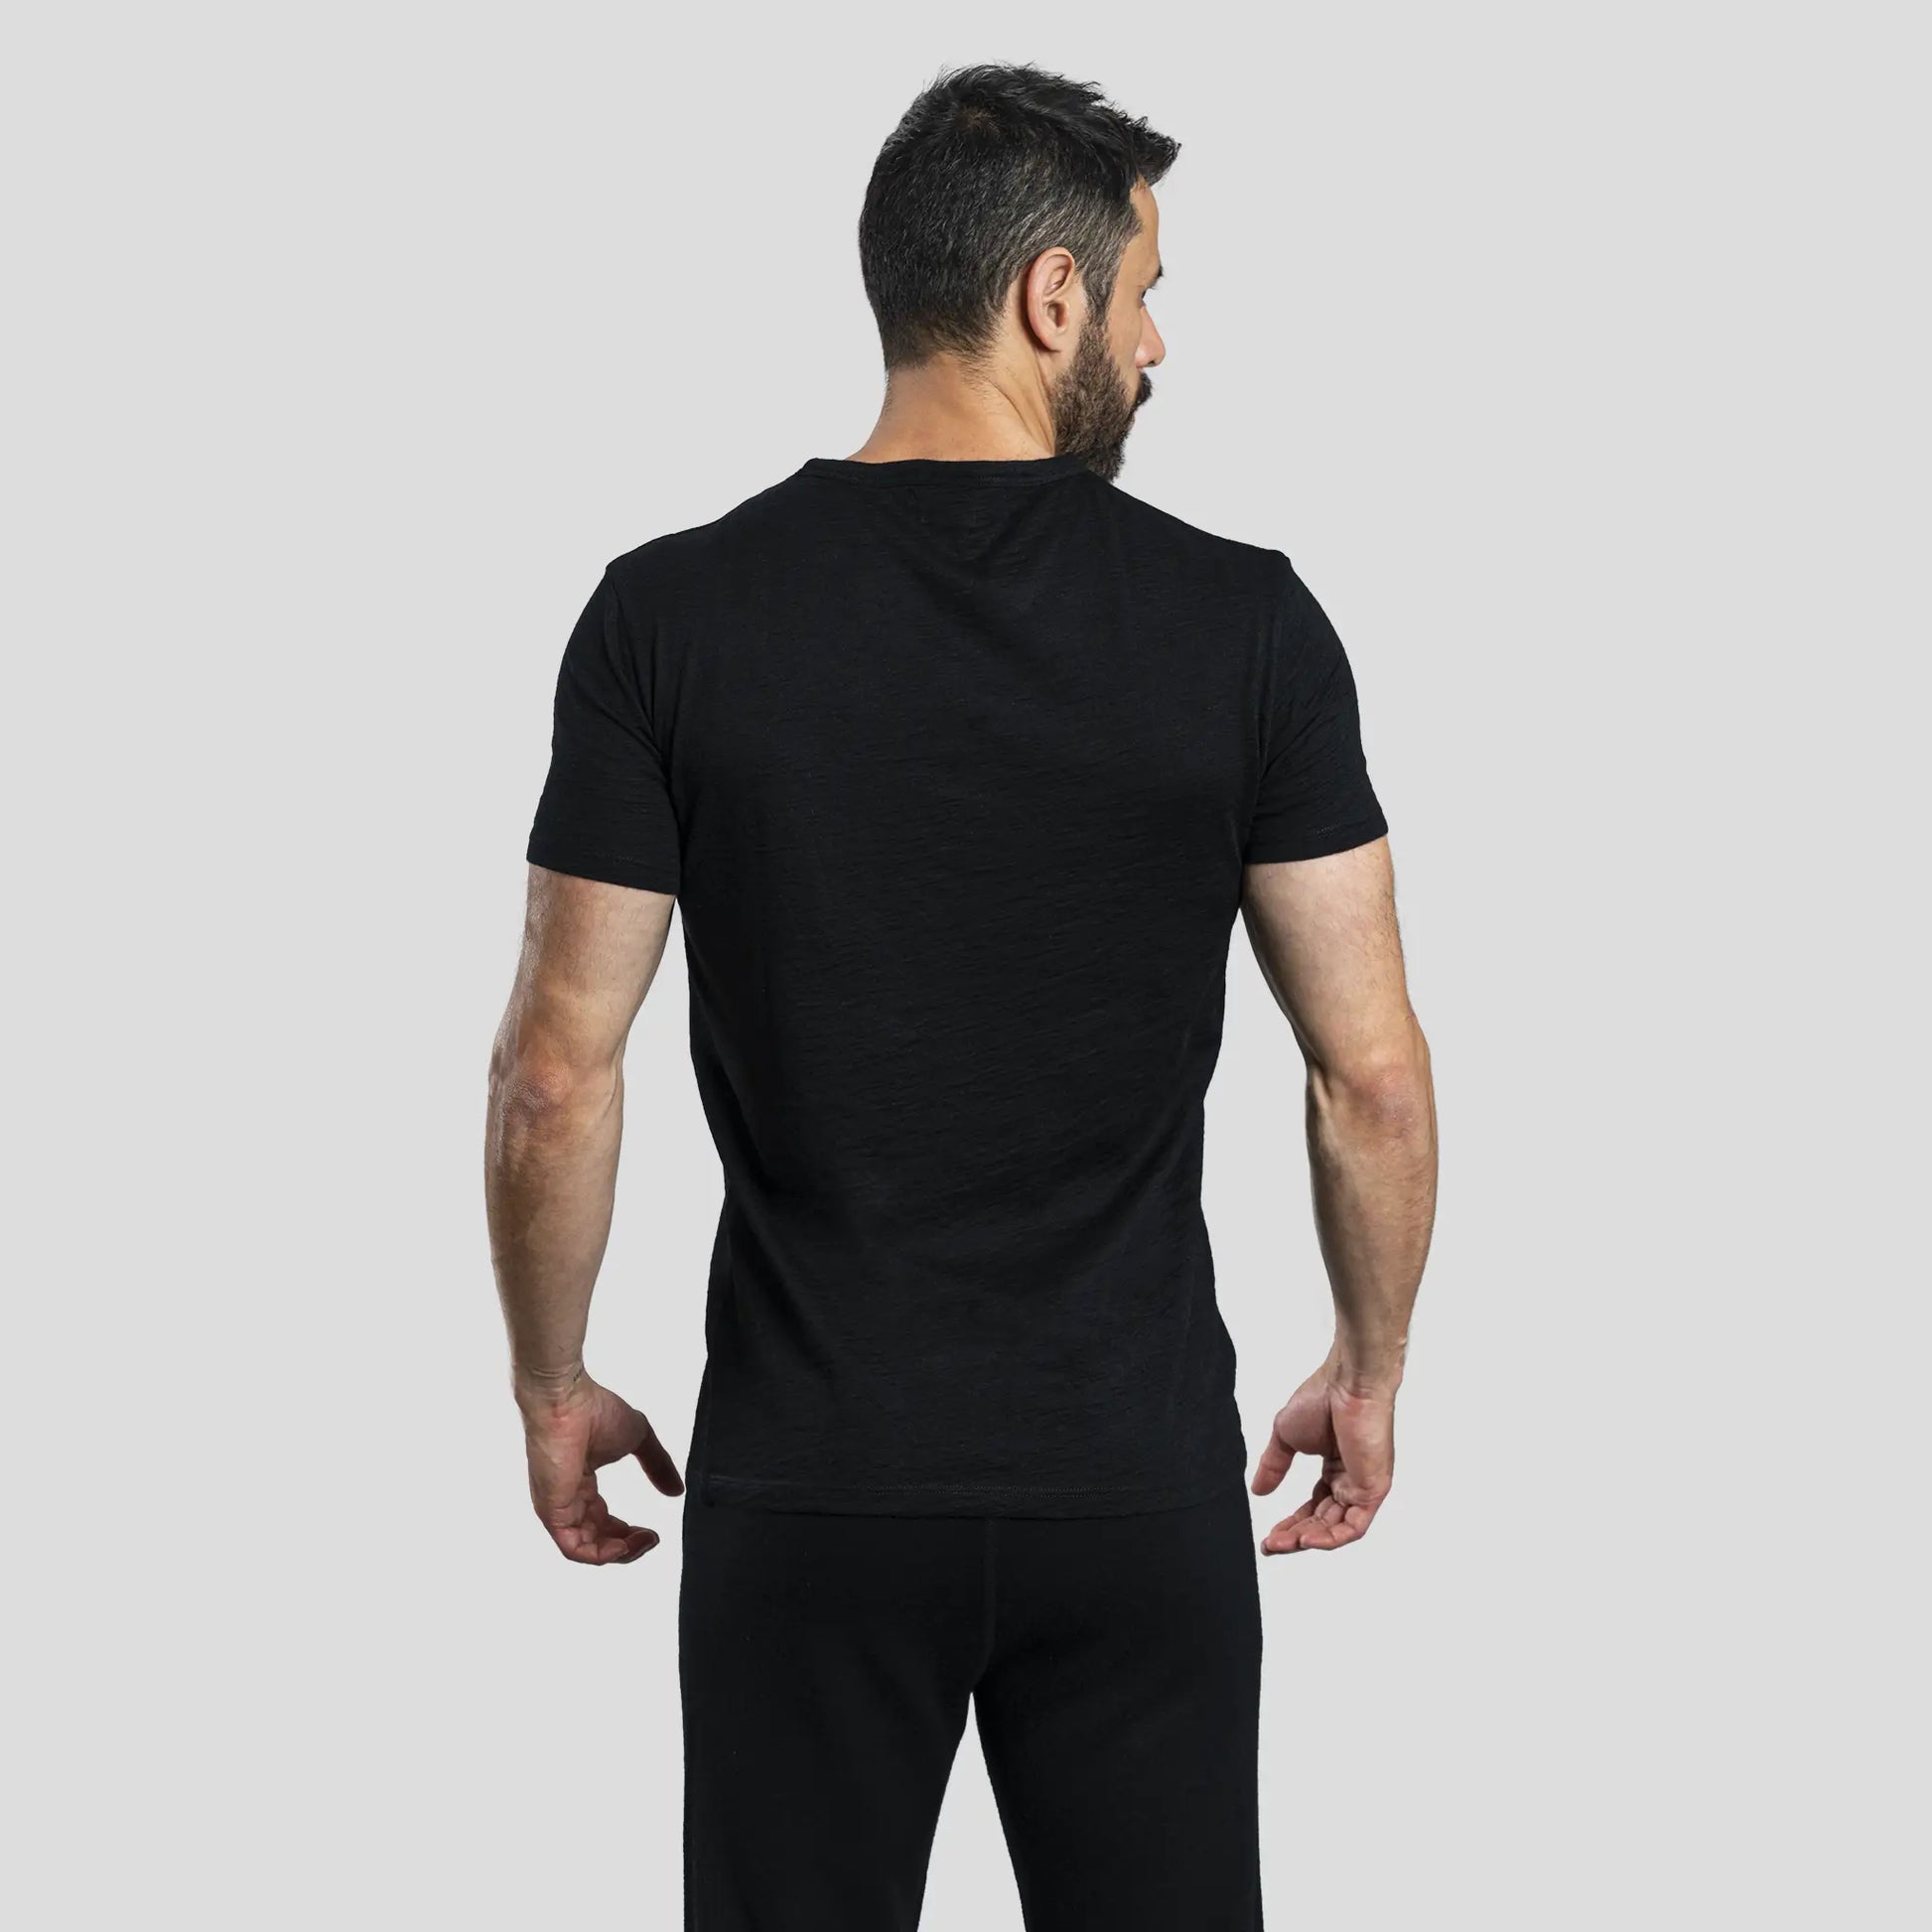 mens high performance vneck tshirt color black